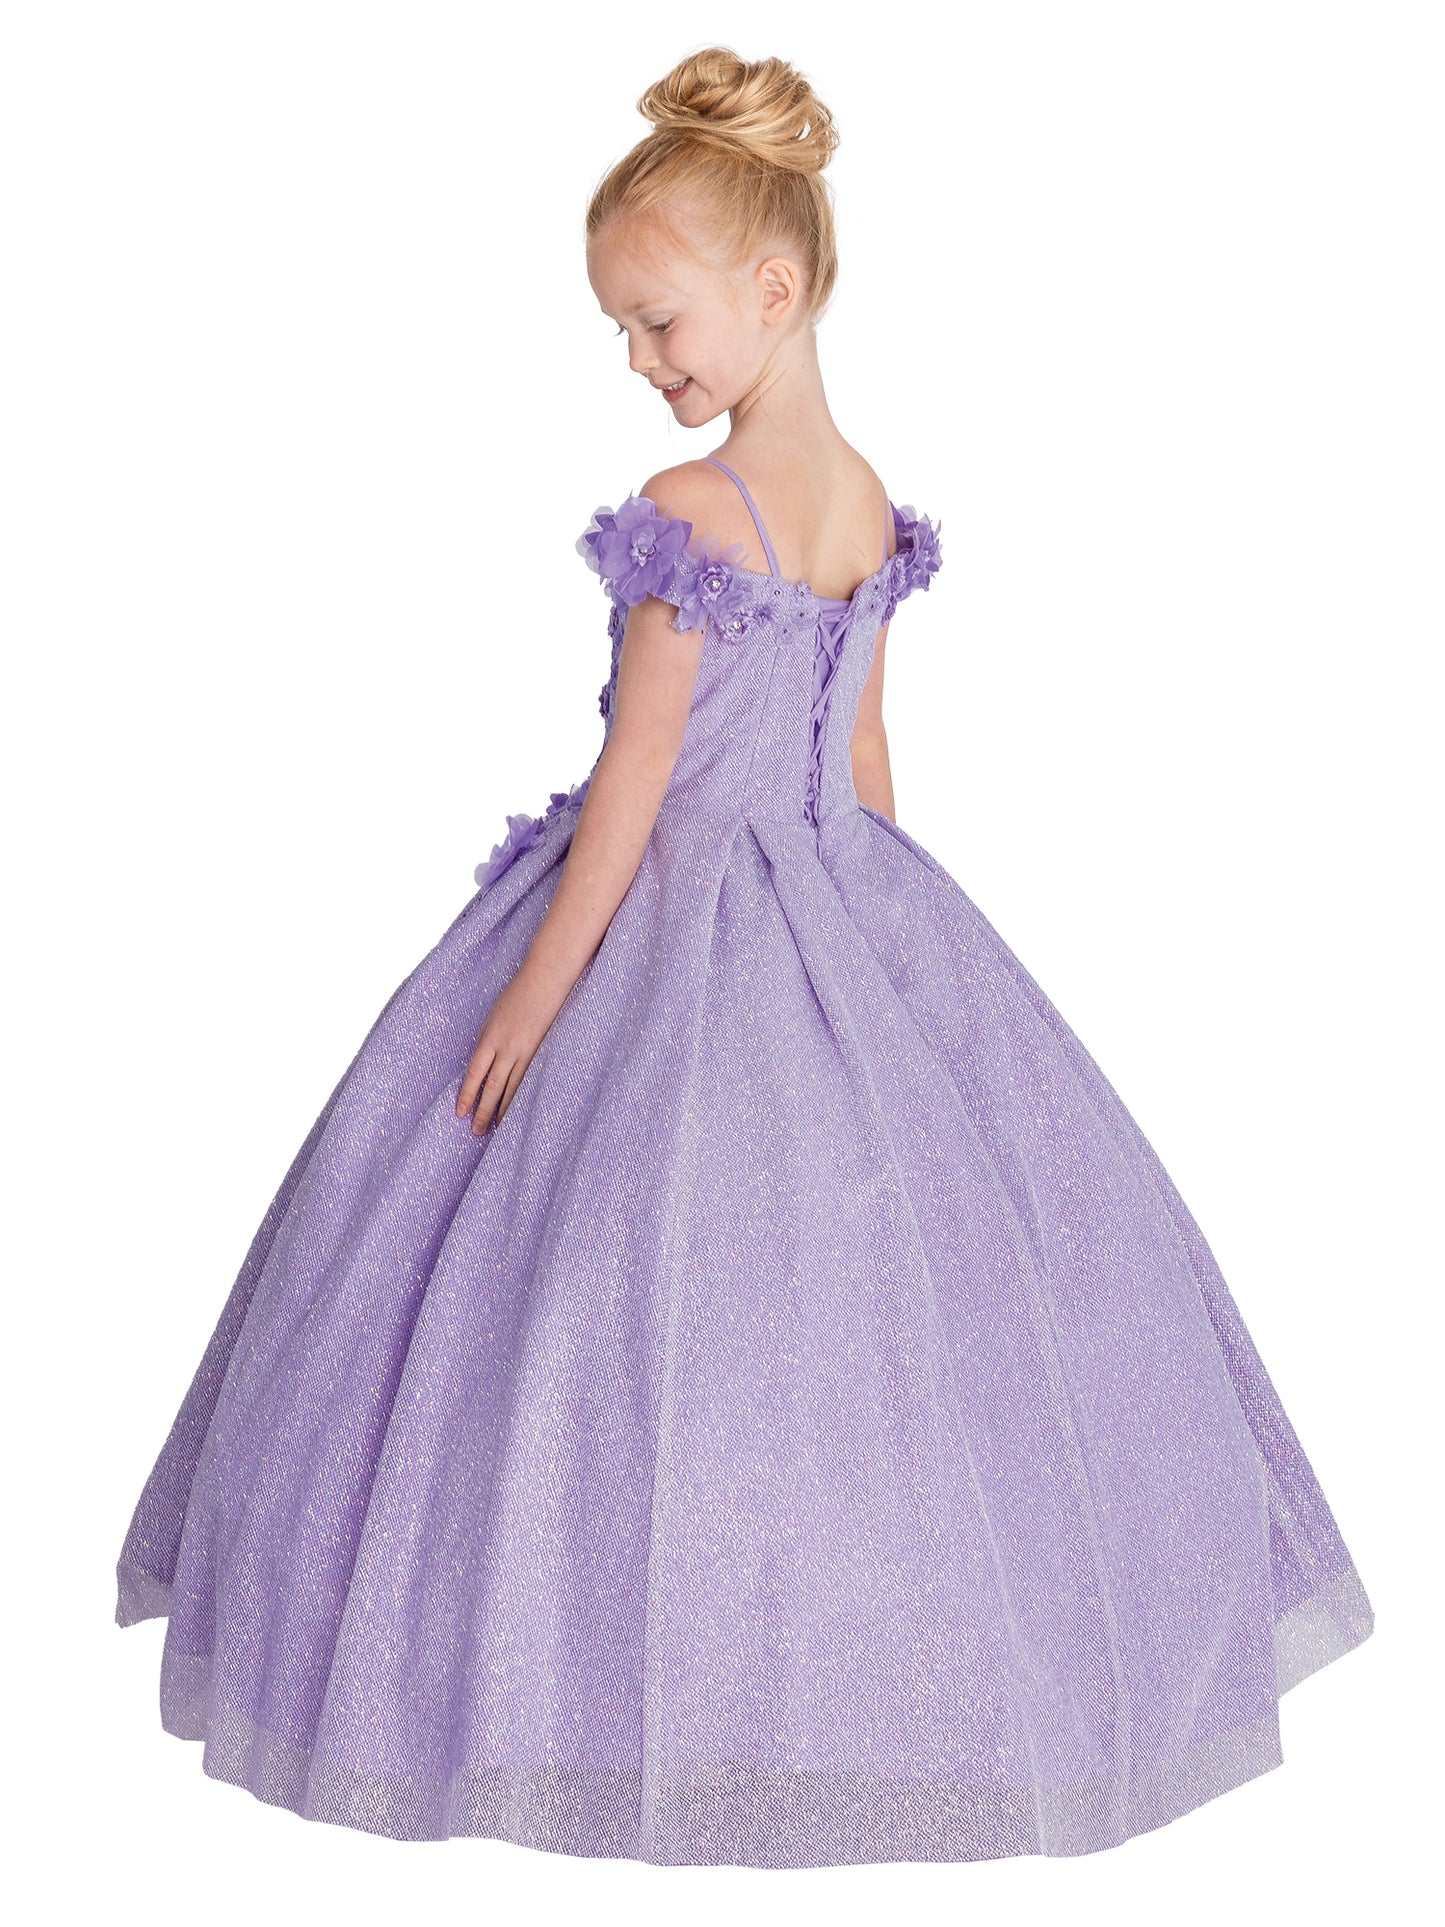 DQ K758 Size 2 Lilac Girls Off the Shoulder Glitter Pageant Dress 3D Flower Corset